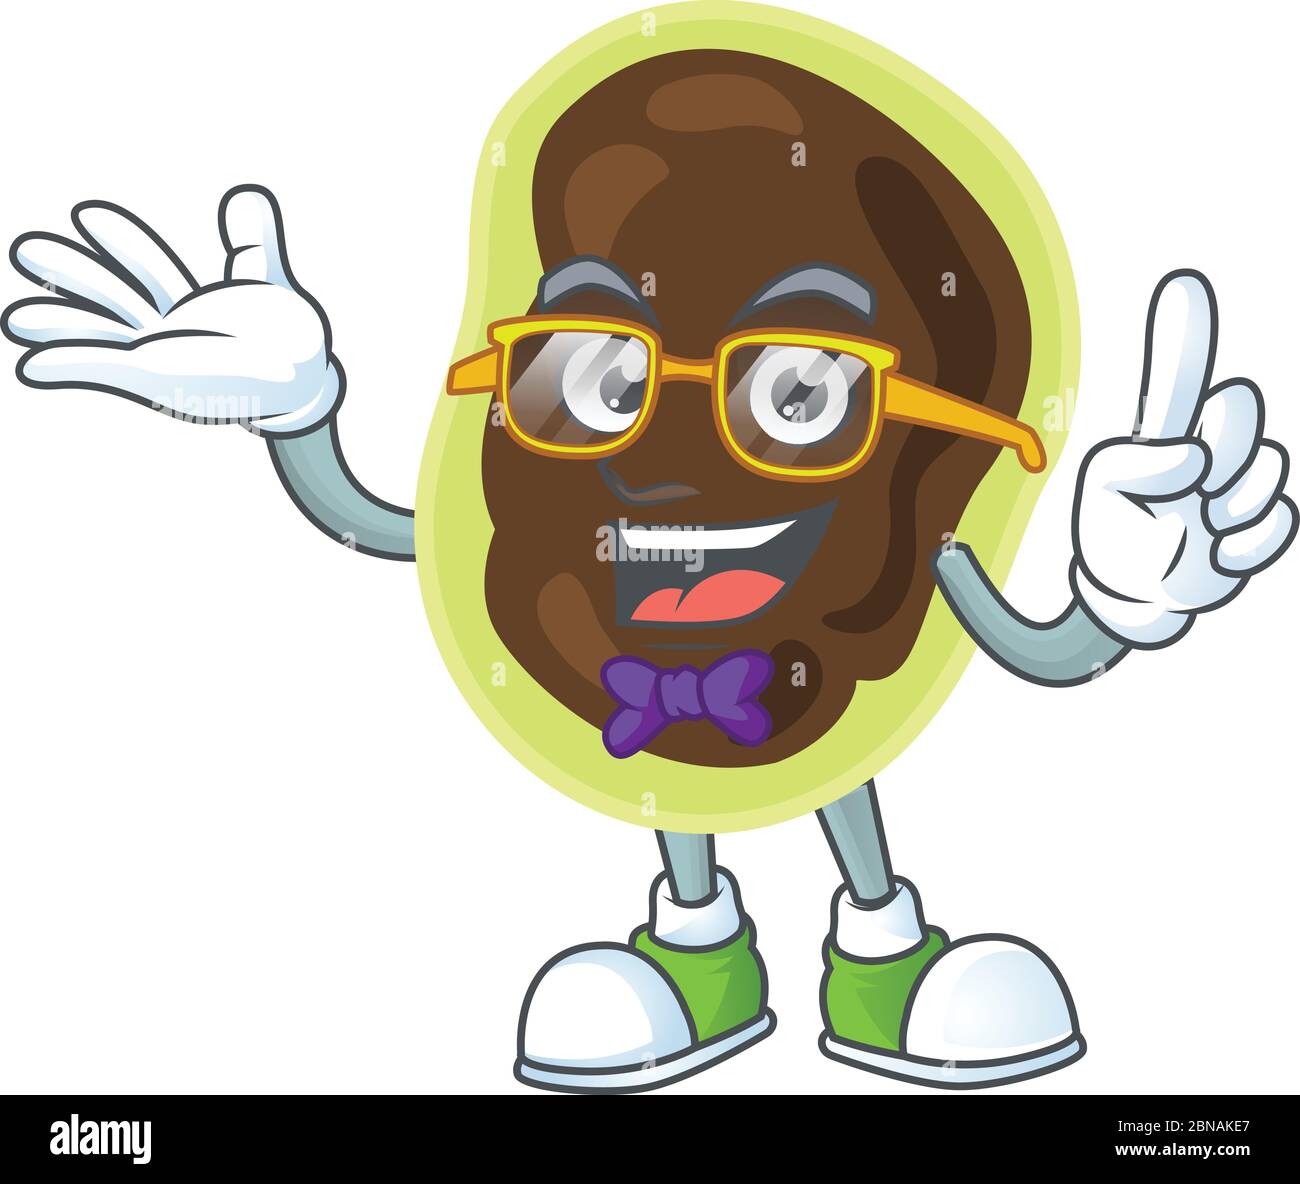 Cartoon character design of nerd firmicutes with weird glasses Stock Vector